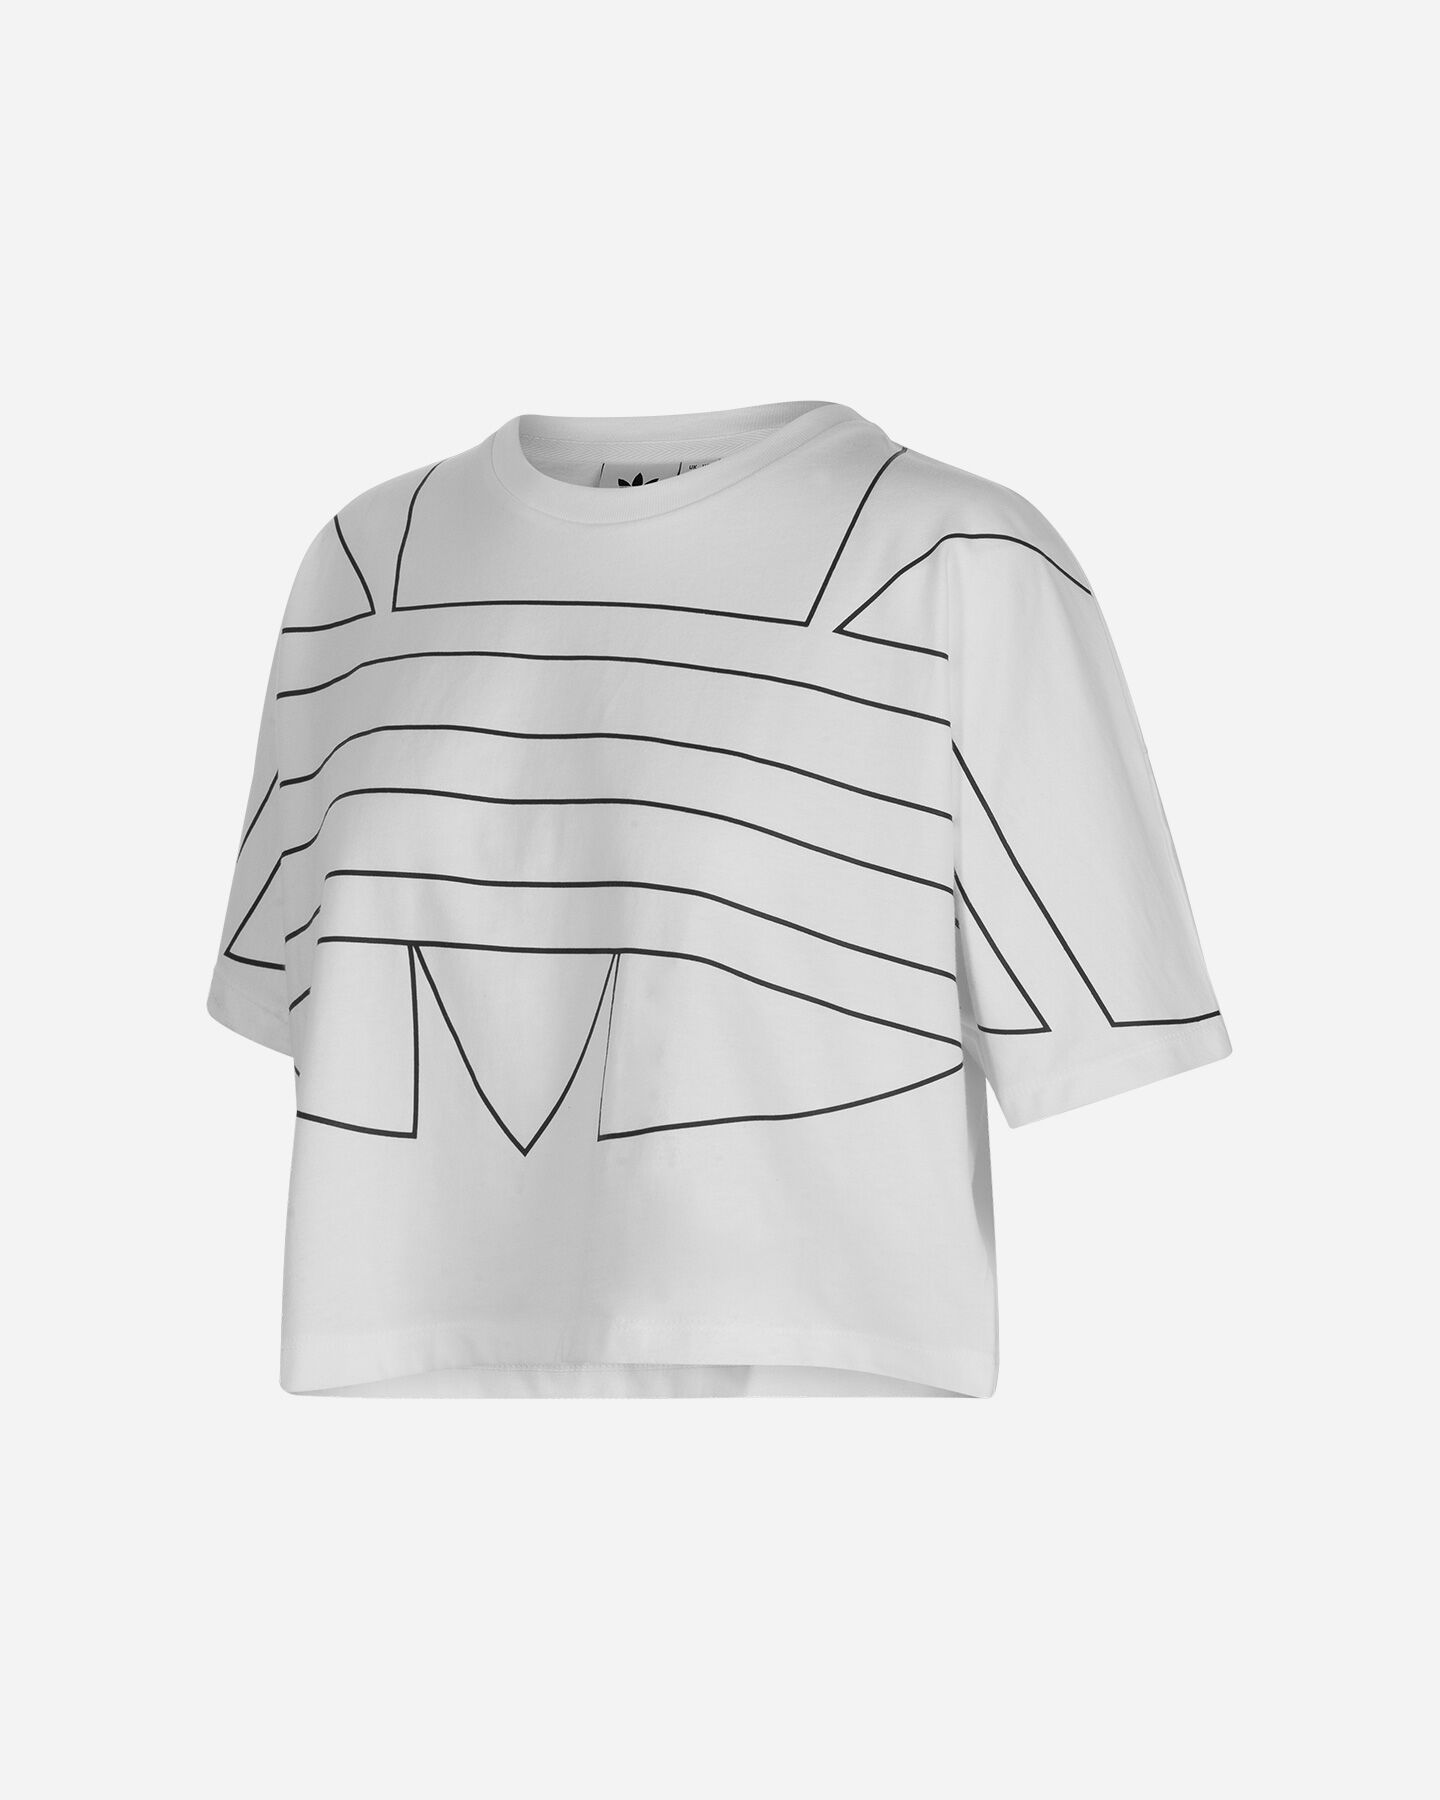  T-Shirt ADIDAS ORIGINALS BIG TREFOIL W S5210185|UNI|36 scatto 0